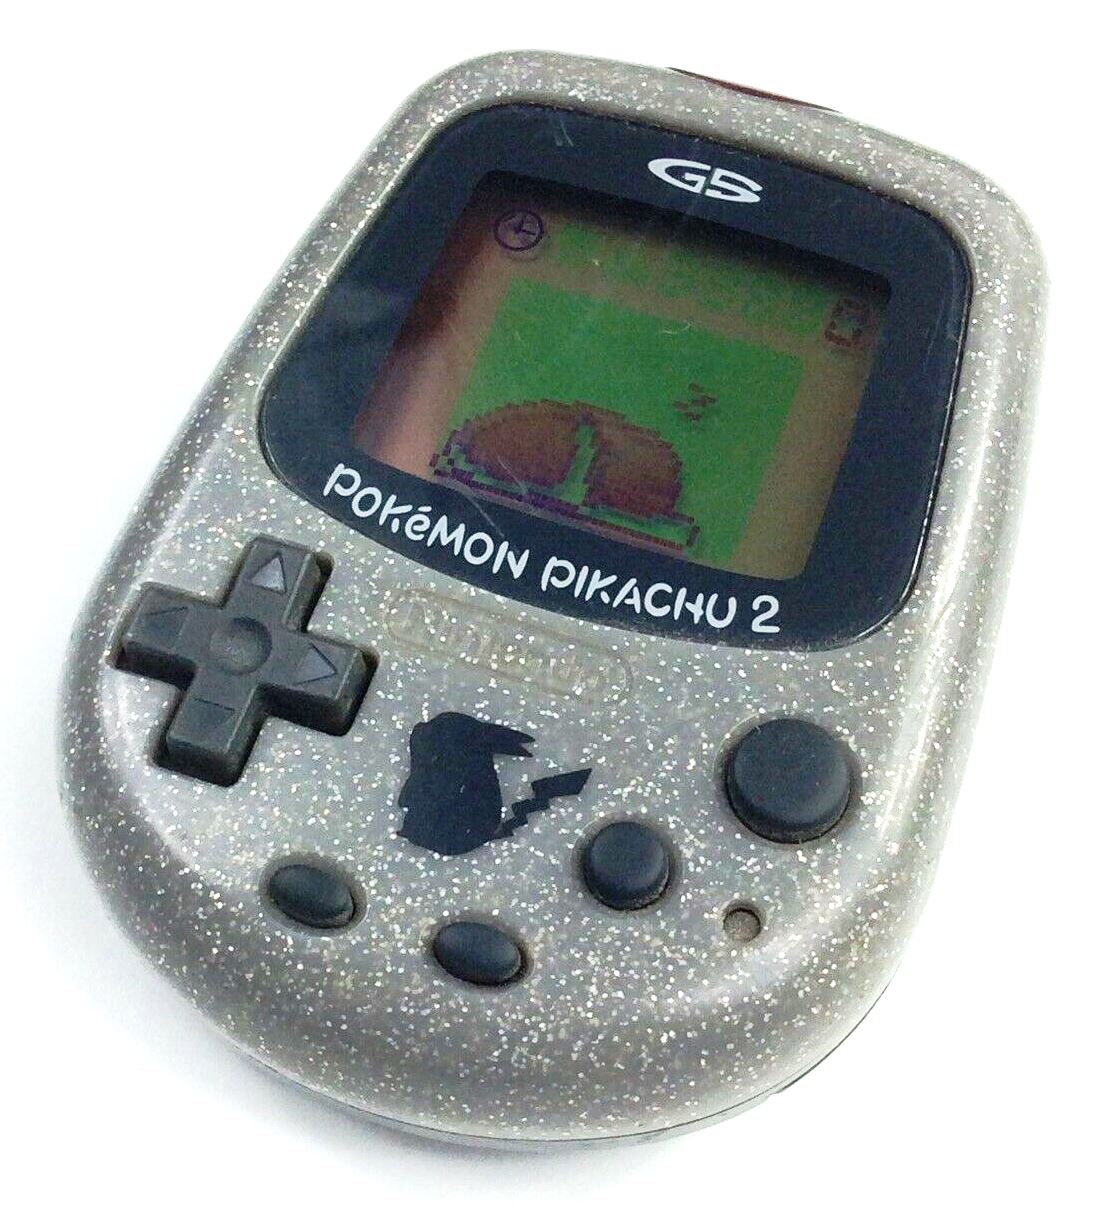 Pokémon Pikachu 2 GS Nintendo Game (2000)-aaa